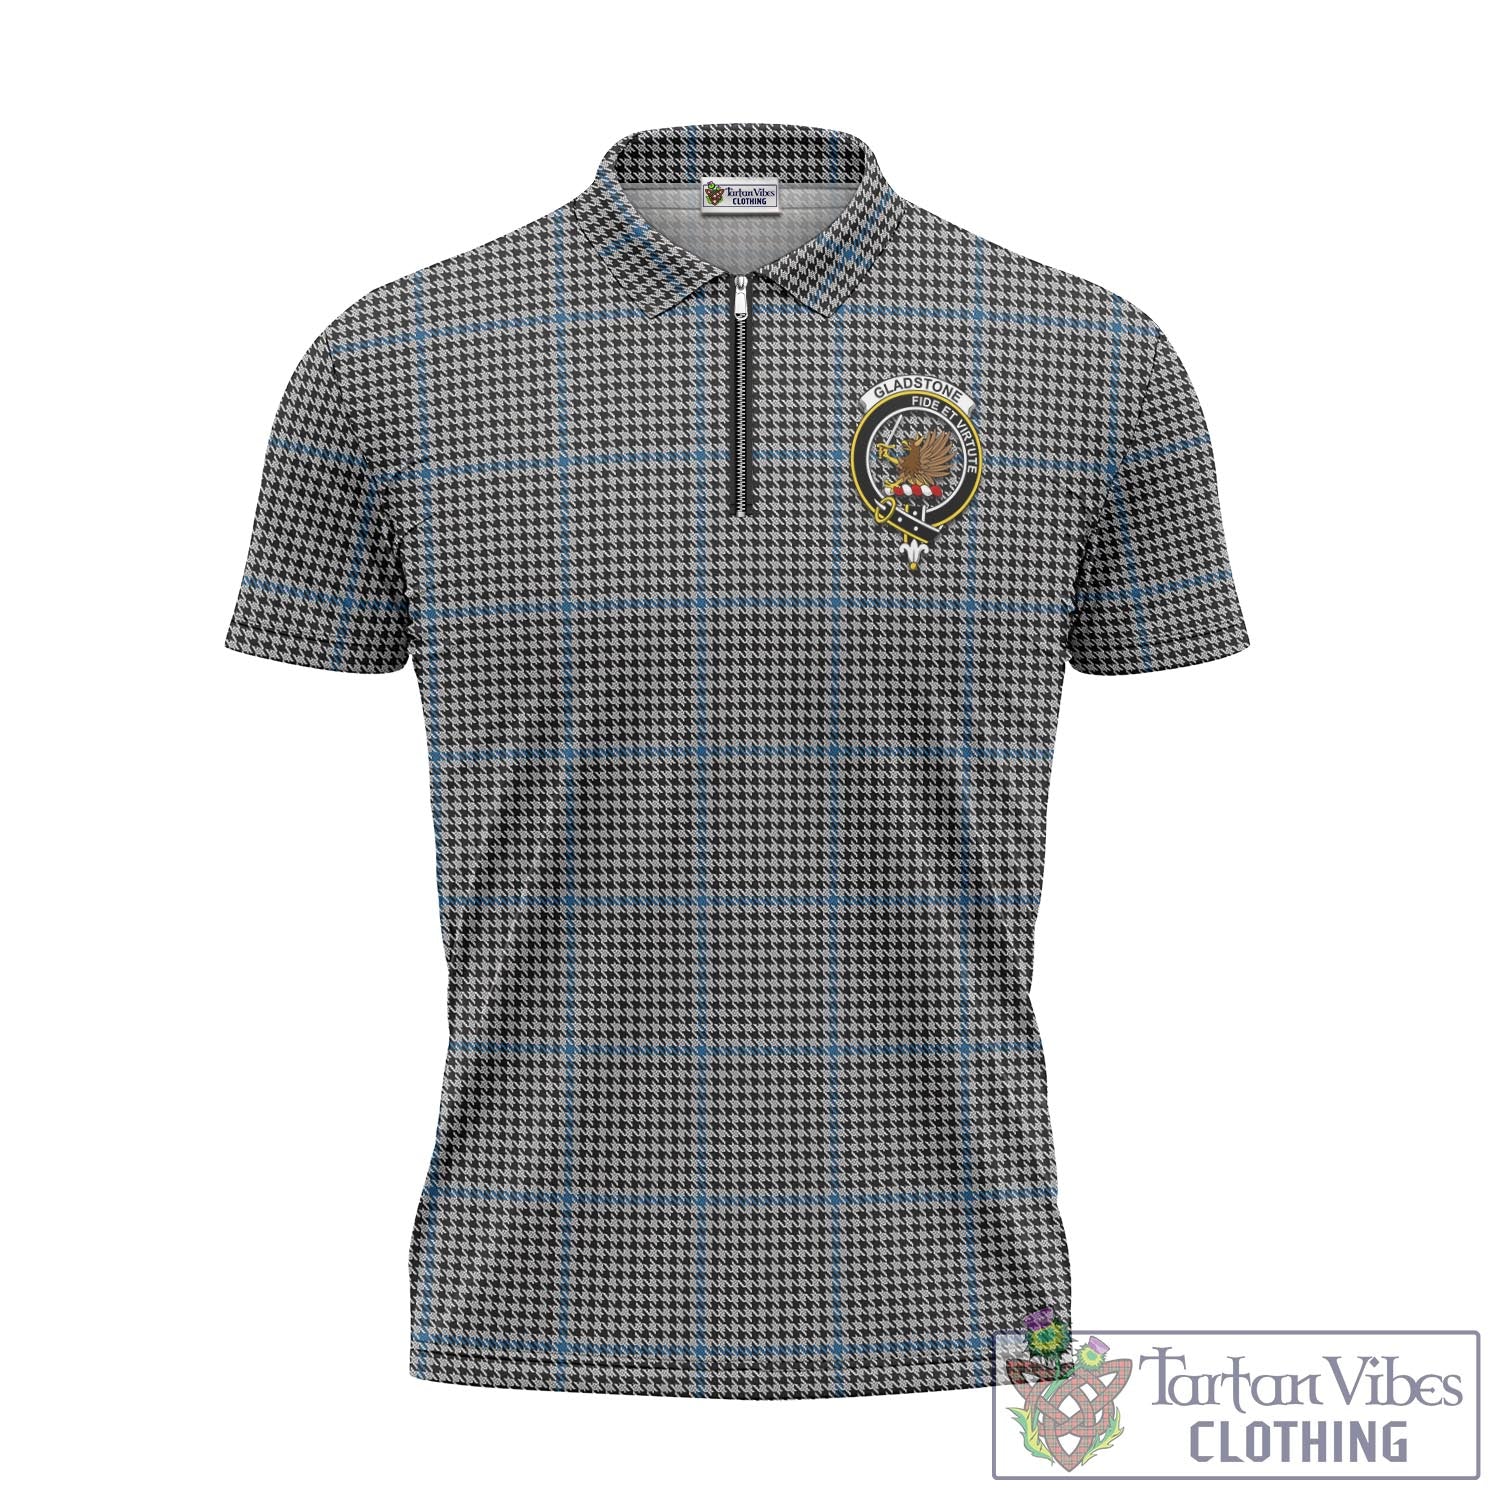 Tartan Vibes Clothing Gladstone Tartan Zipper Polo Shirt with Family Crest